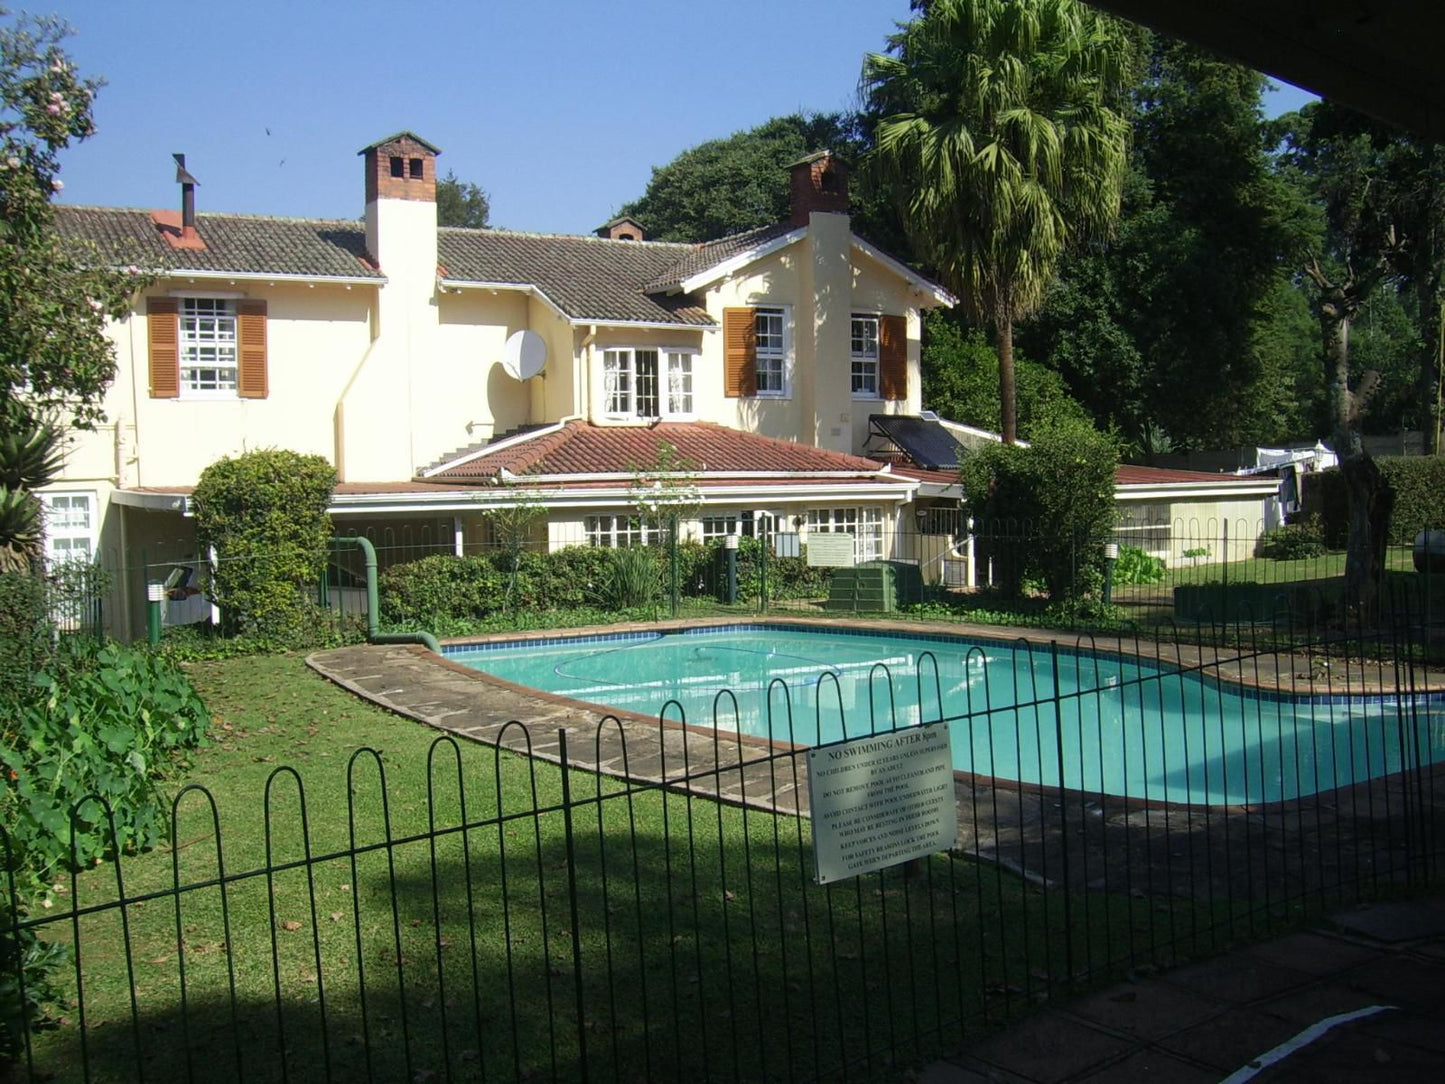 Nutmeg Bandb Howick Kwazulu Natal South Africa House, Building, Architecture, Palm Tree, Plant, Nature, Wood, Garden, Swimming Pool